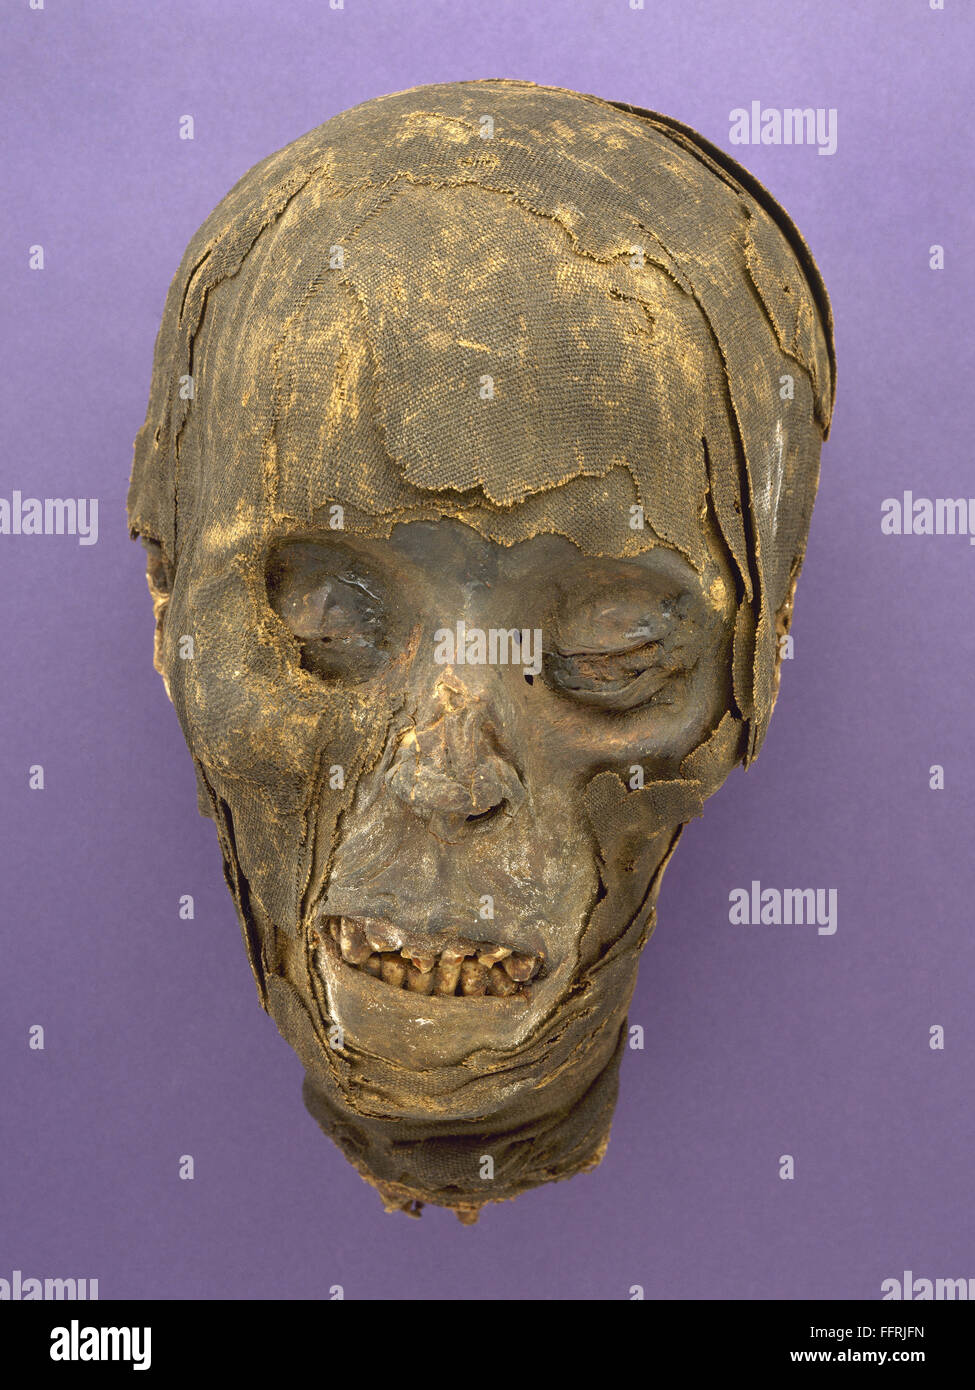 ANCIENT EGPYT: MUMMY. /nThe mummified head of an unidentified Egyptian. Stock Photo